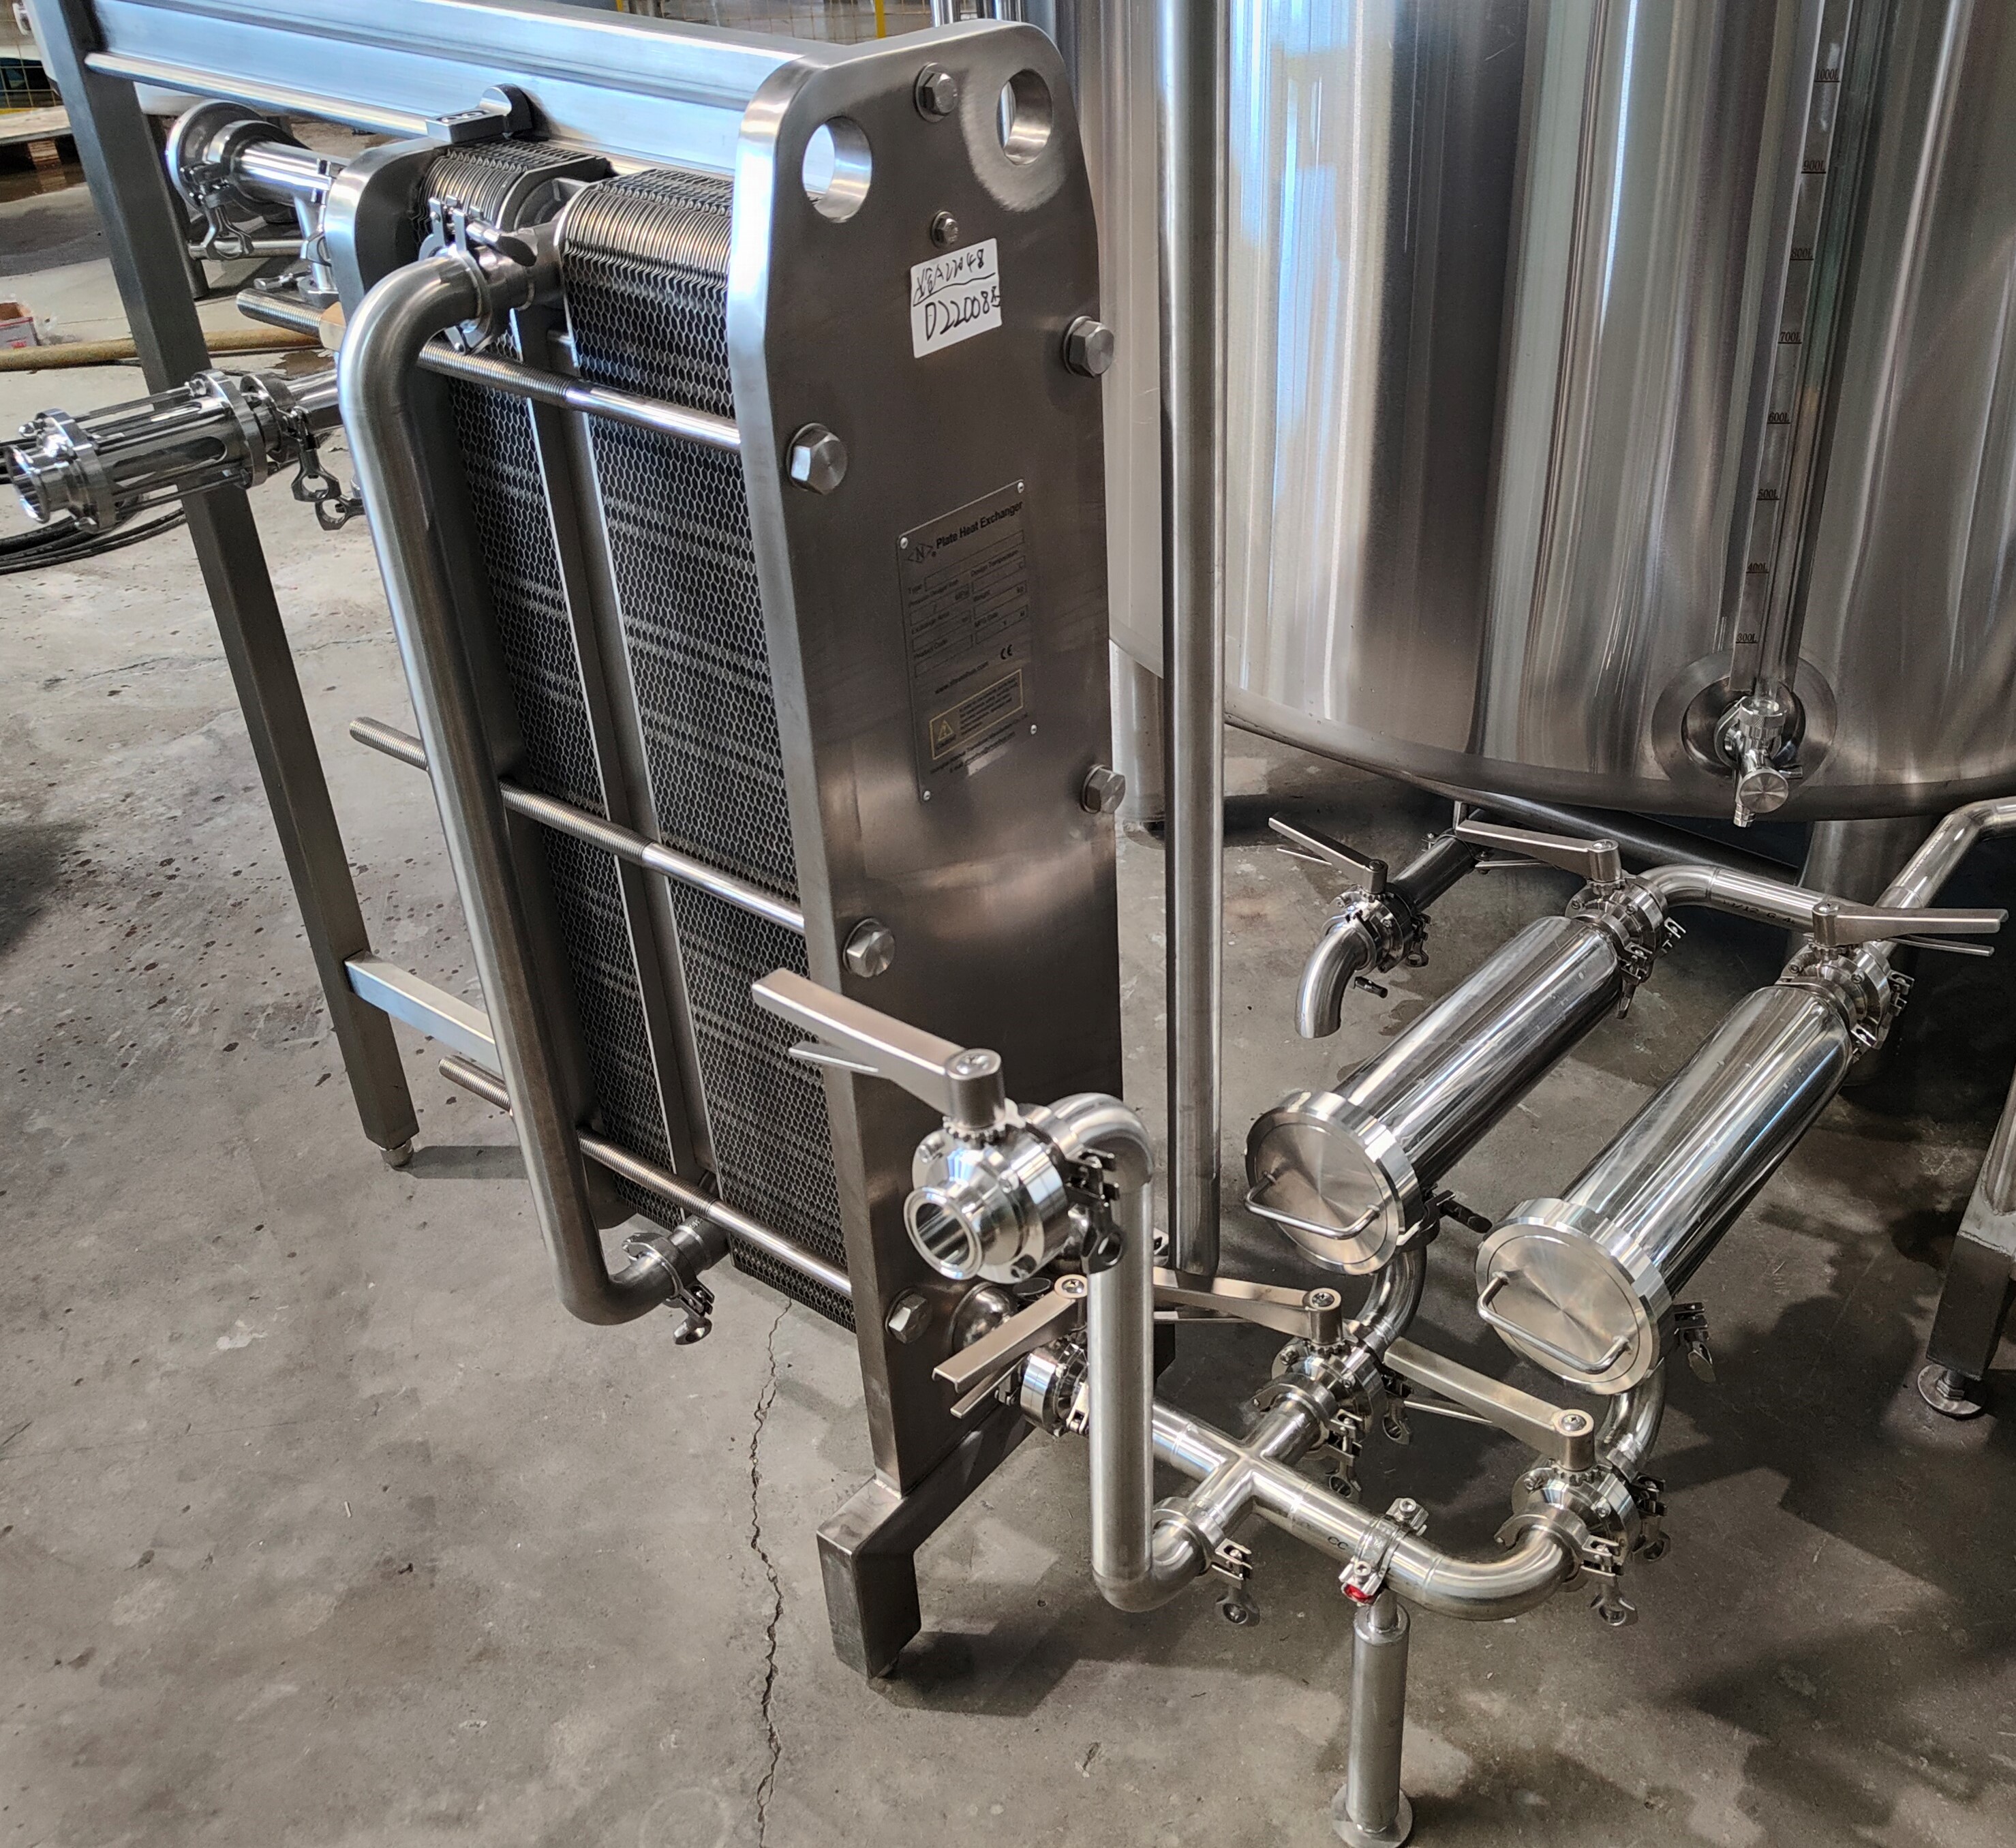 Why do most breweries choose plate heat exchanger when choosing beer equipment?